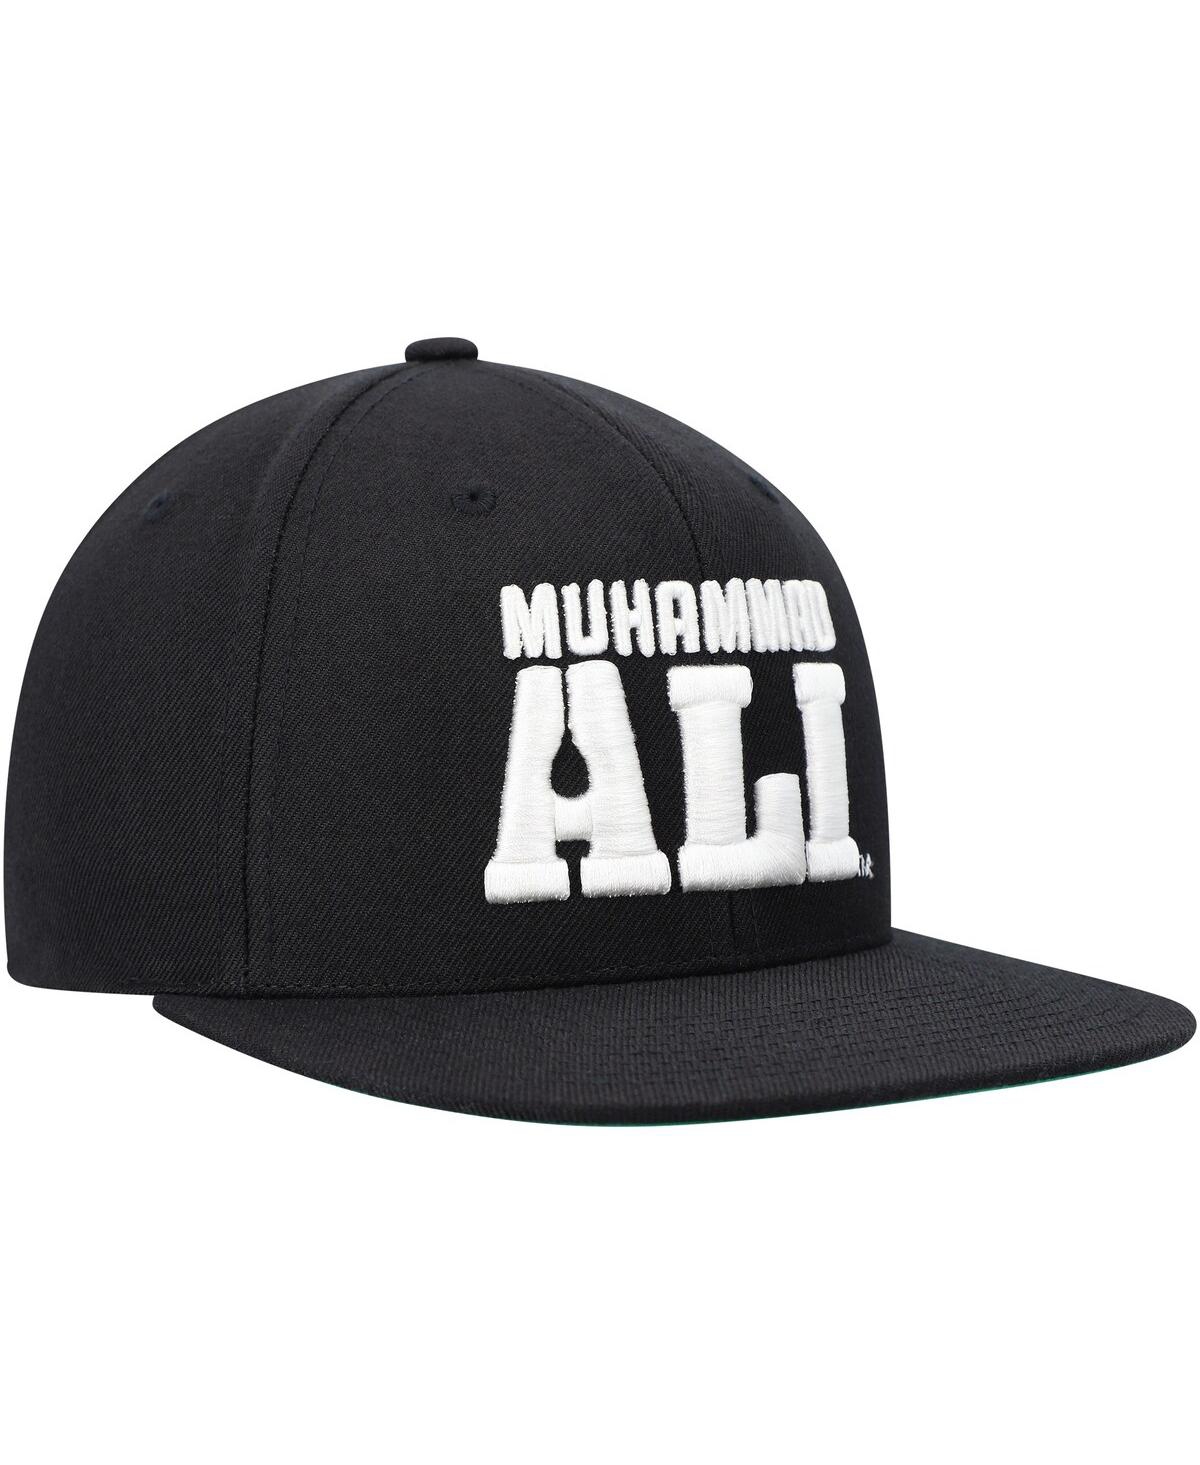 Shop Contenders Clothing Men's And Women's  Black Muhammad Ali Snapback Hat